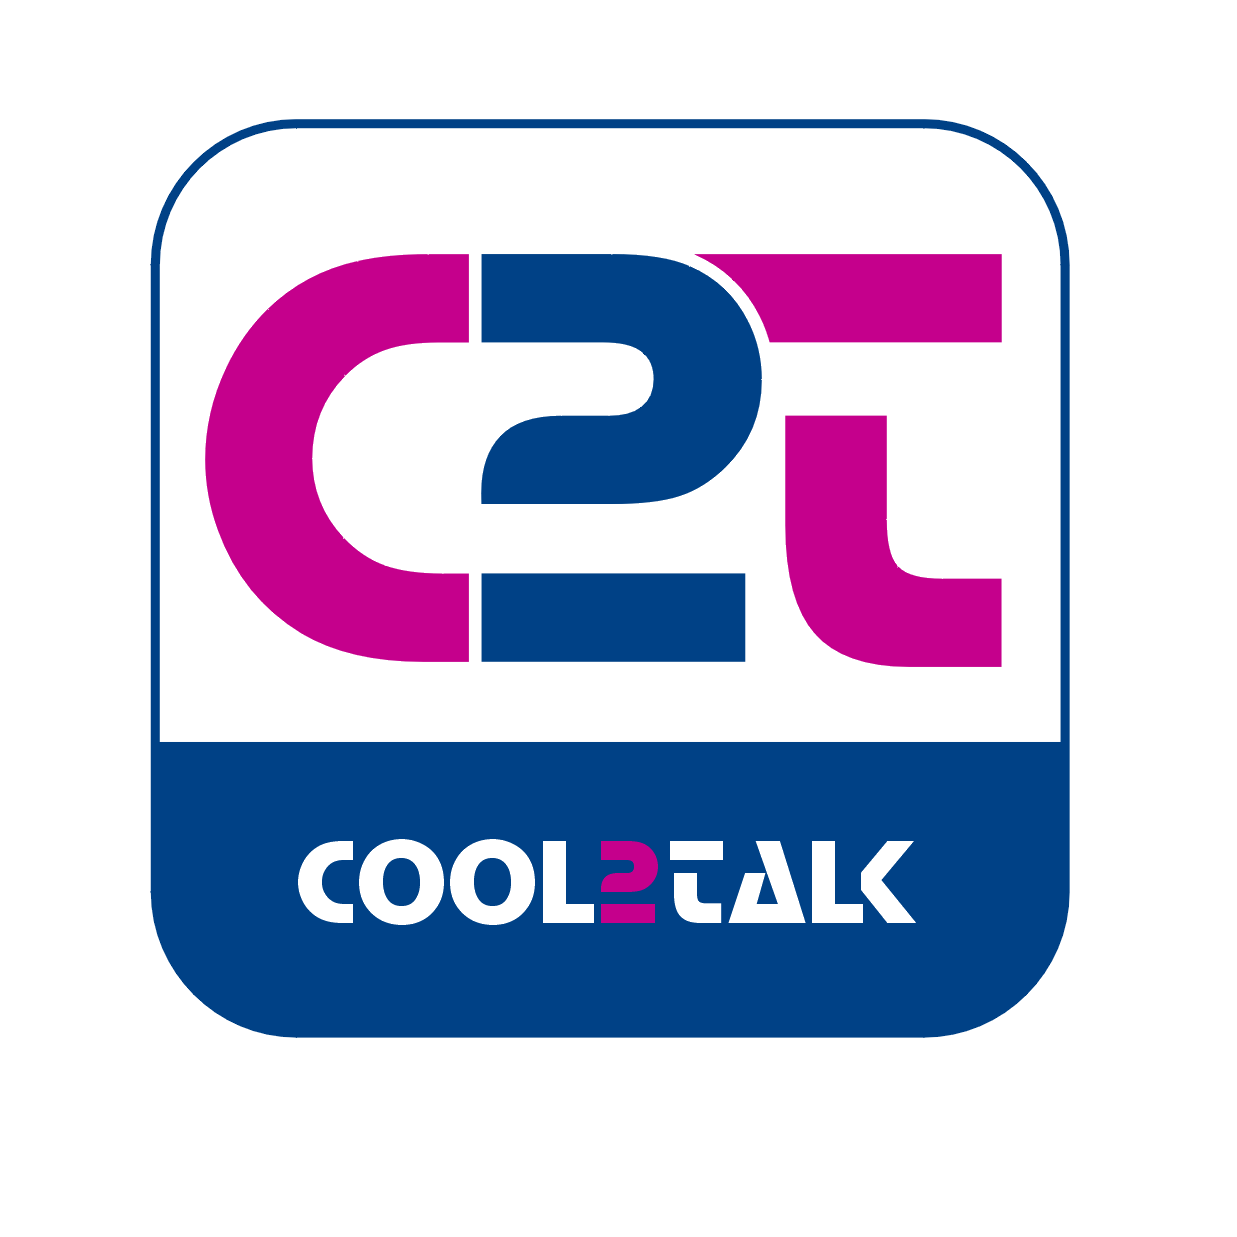 Cool2Talk website